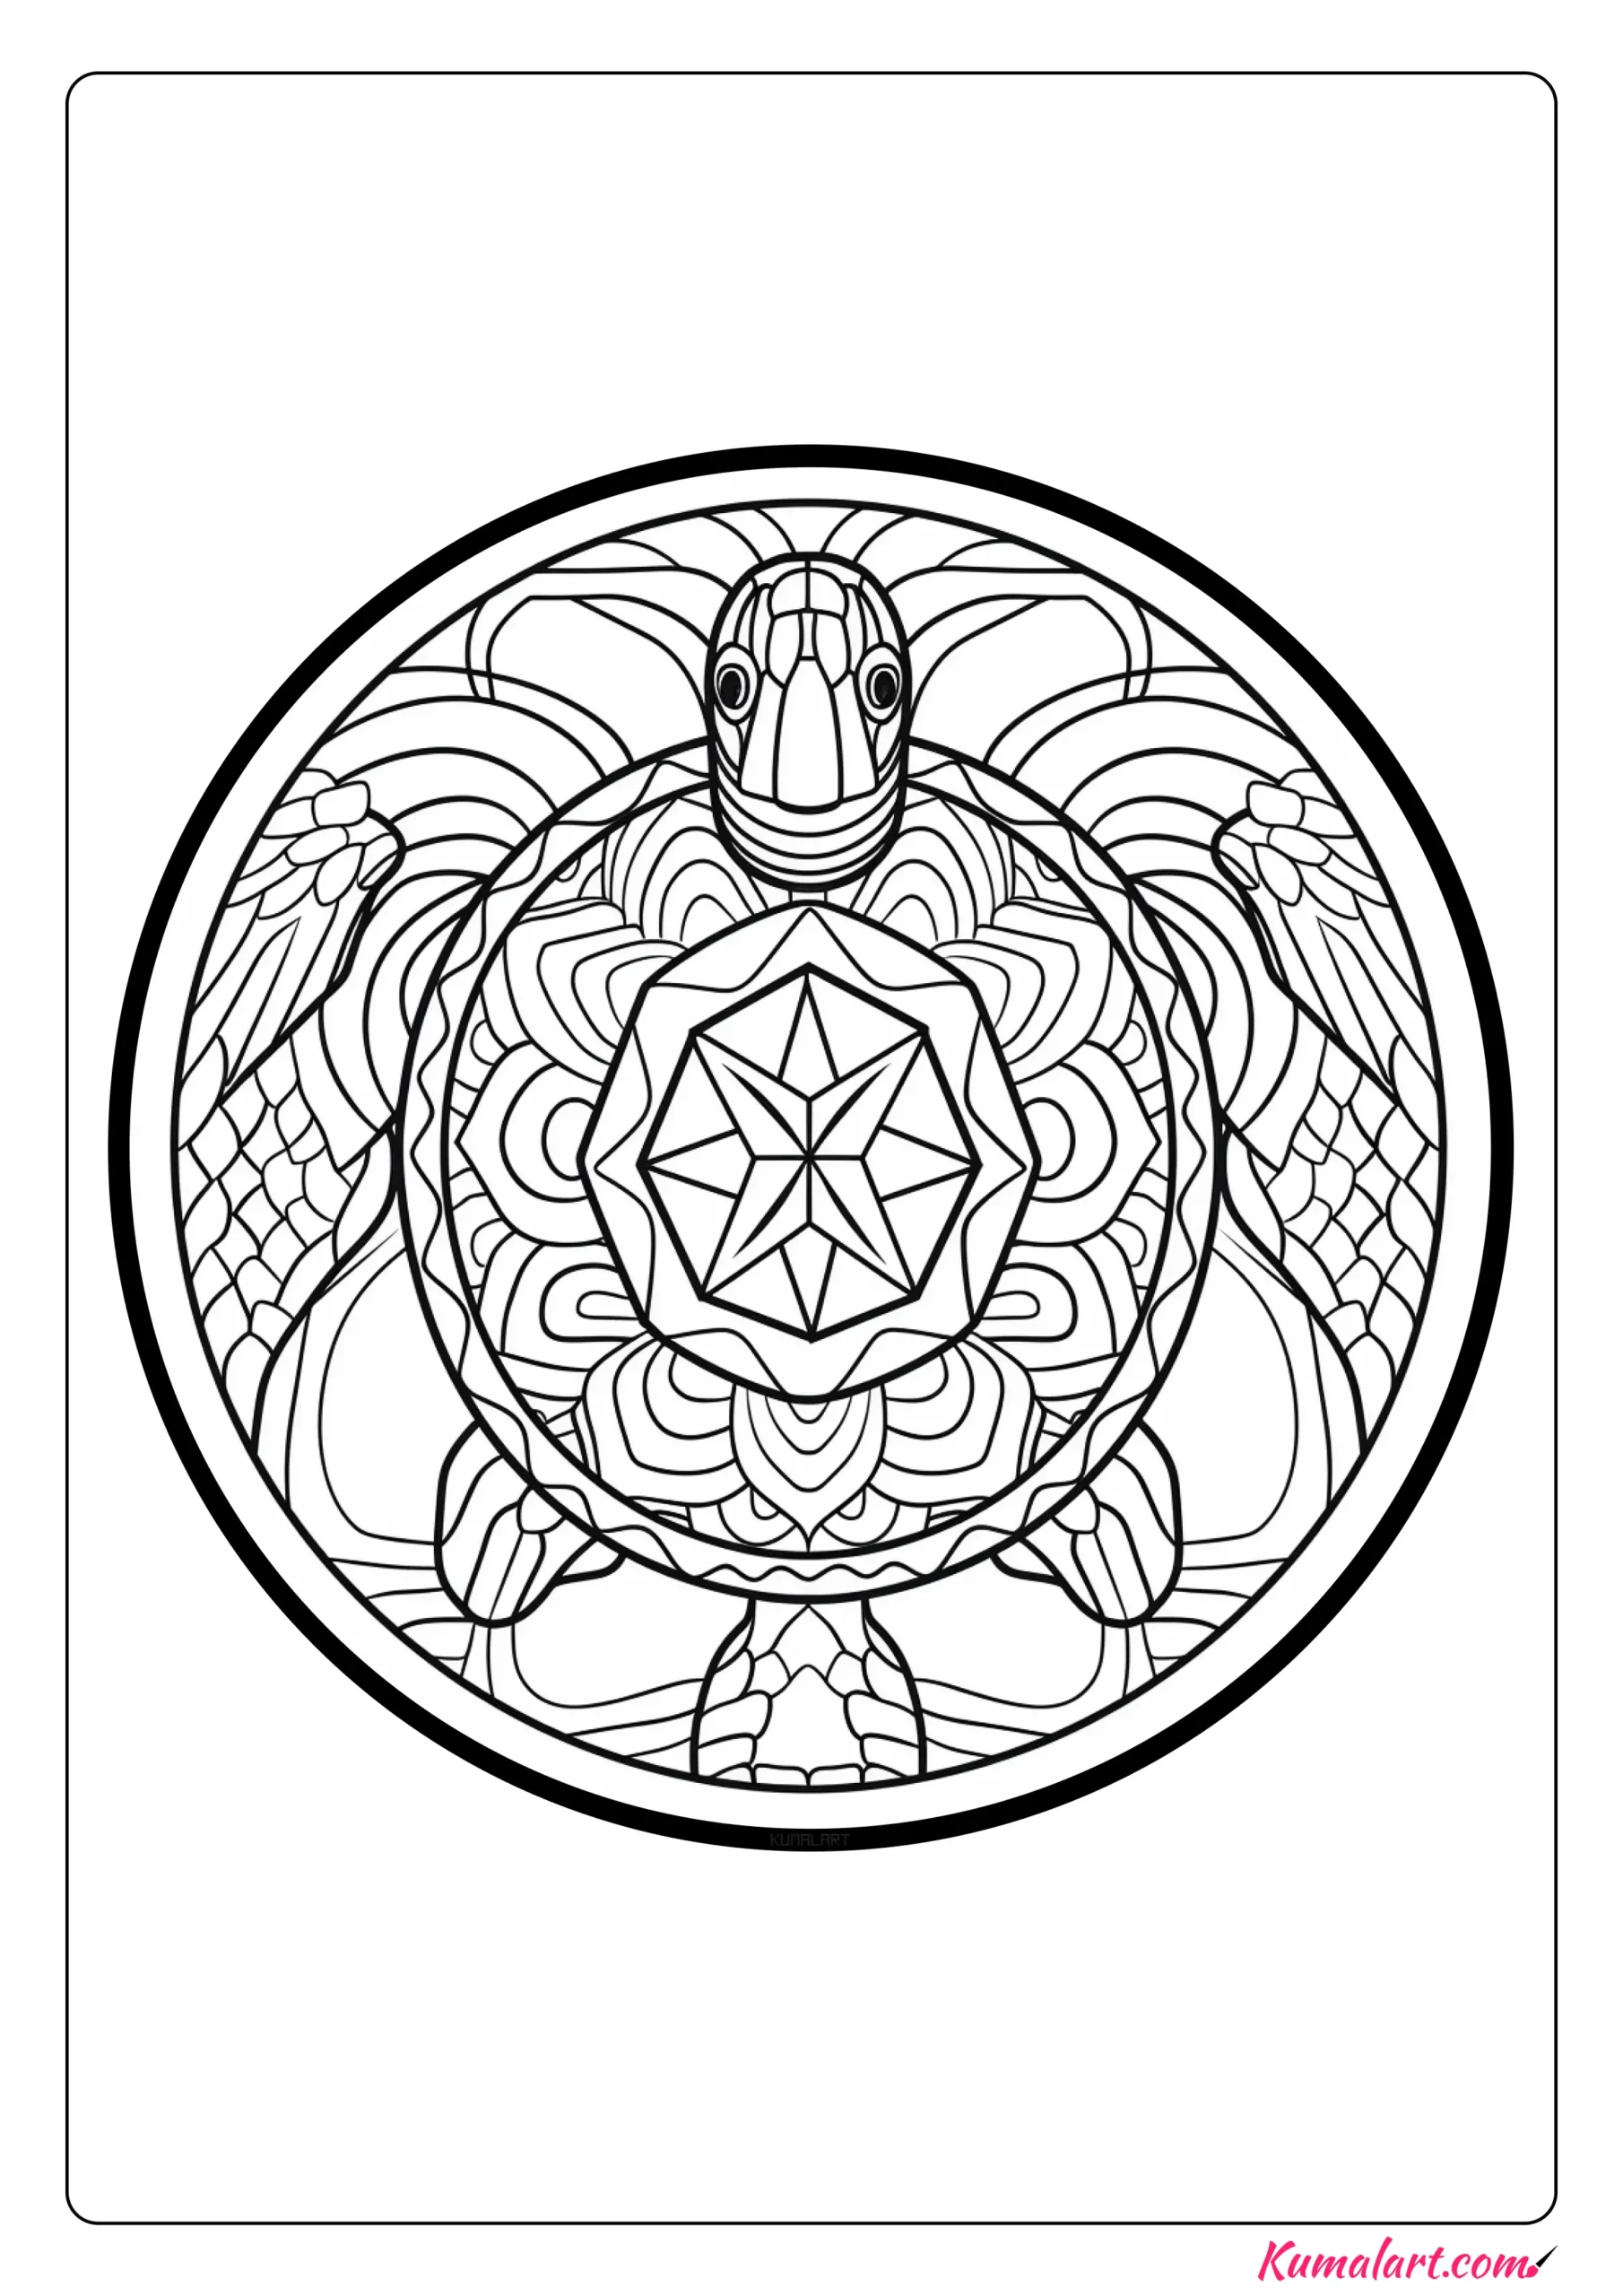 Alex the Turtle Mandala Coloring Page